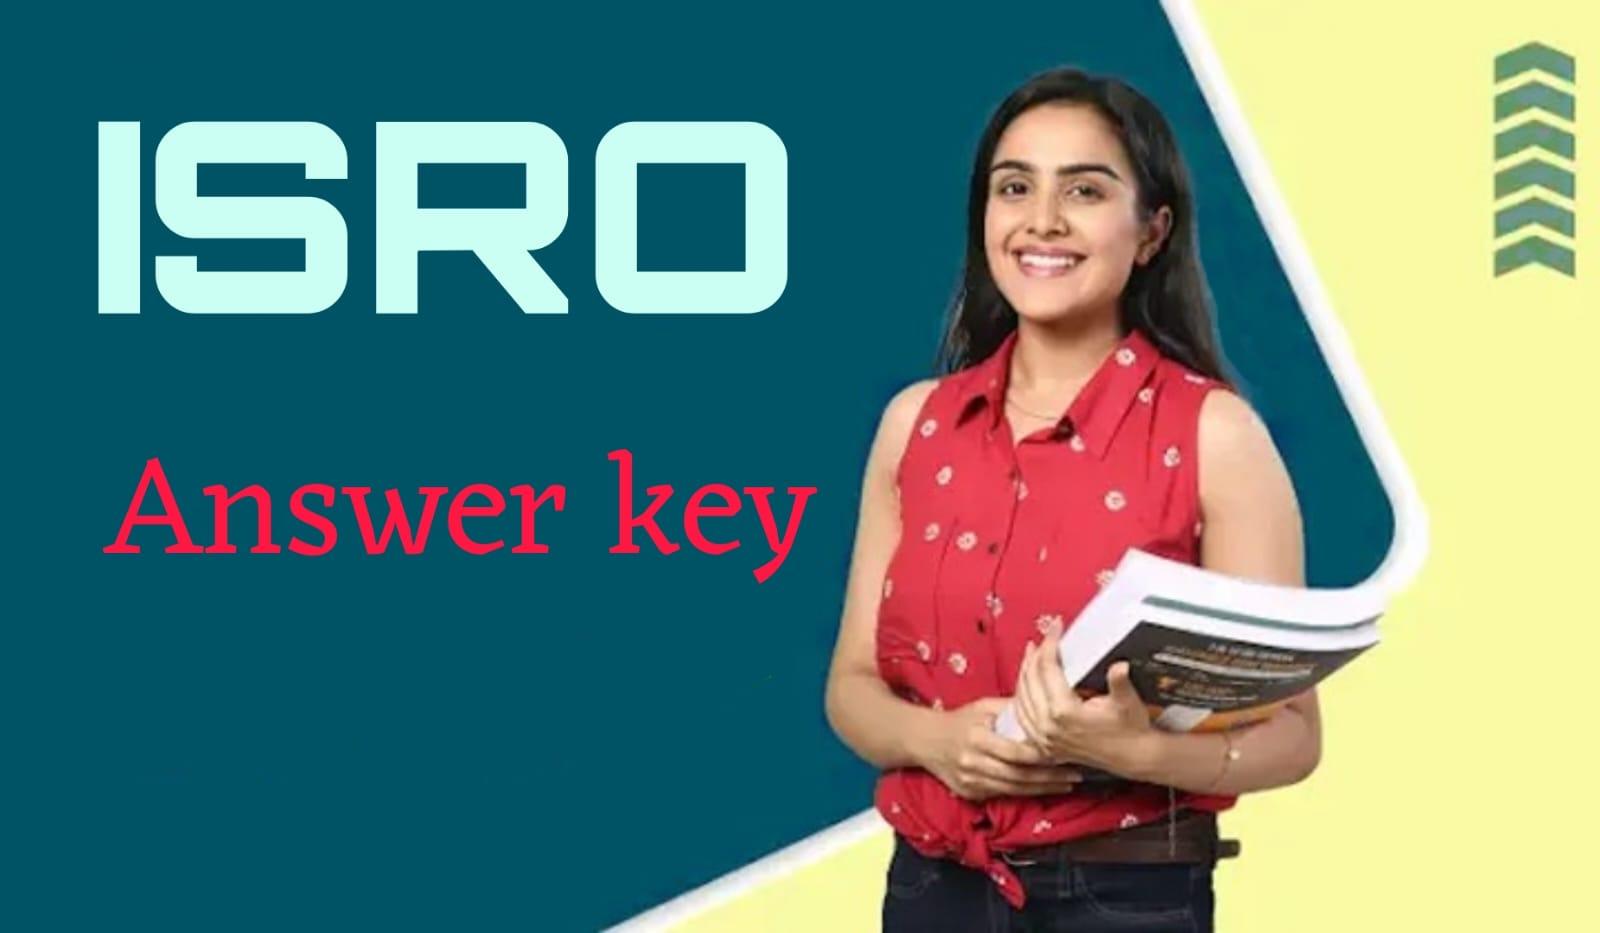 ISRO URSC Answer Key 2024